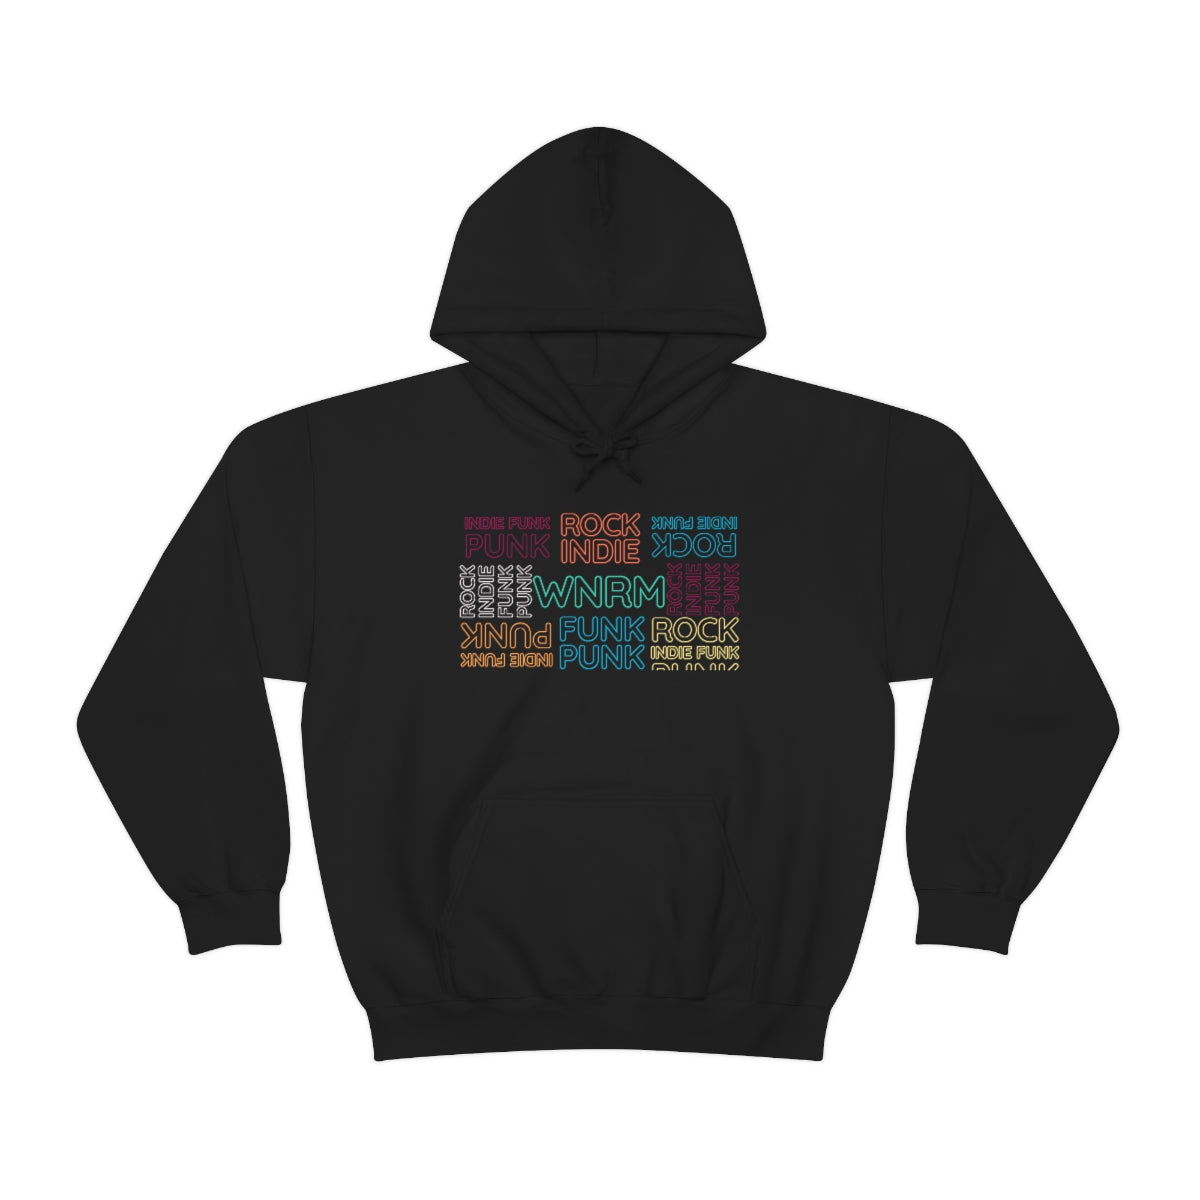 WNRM Neon Block hooded sweatshirt